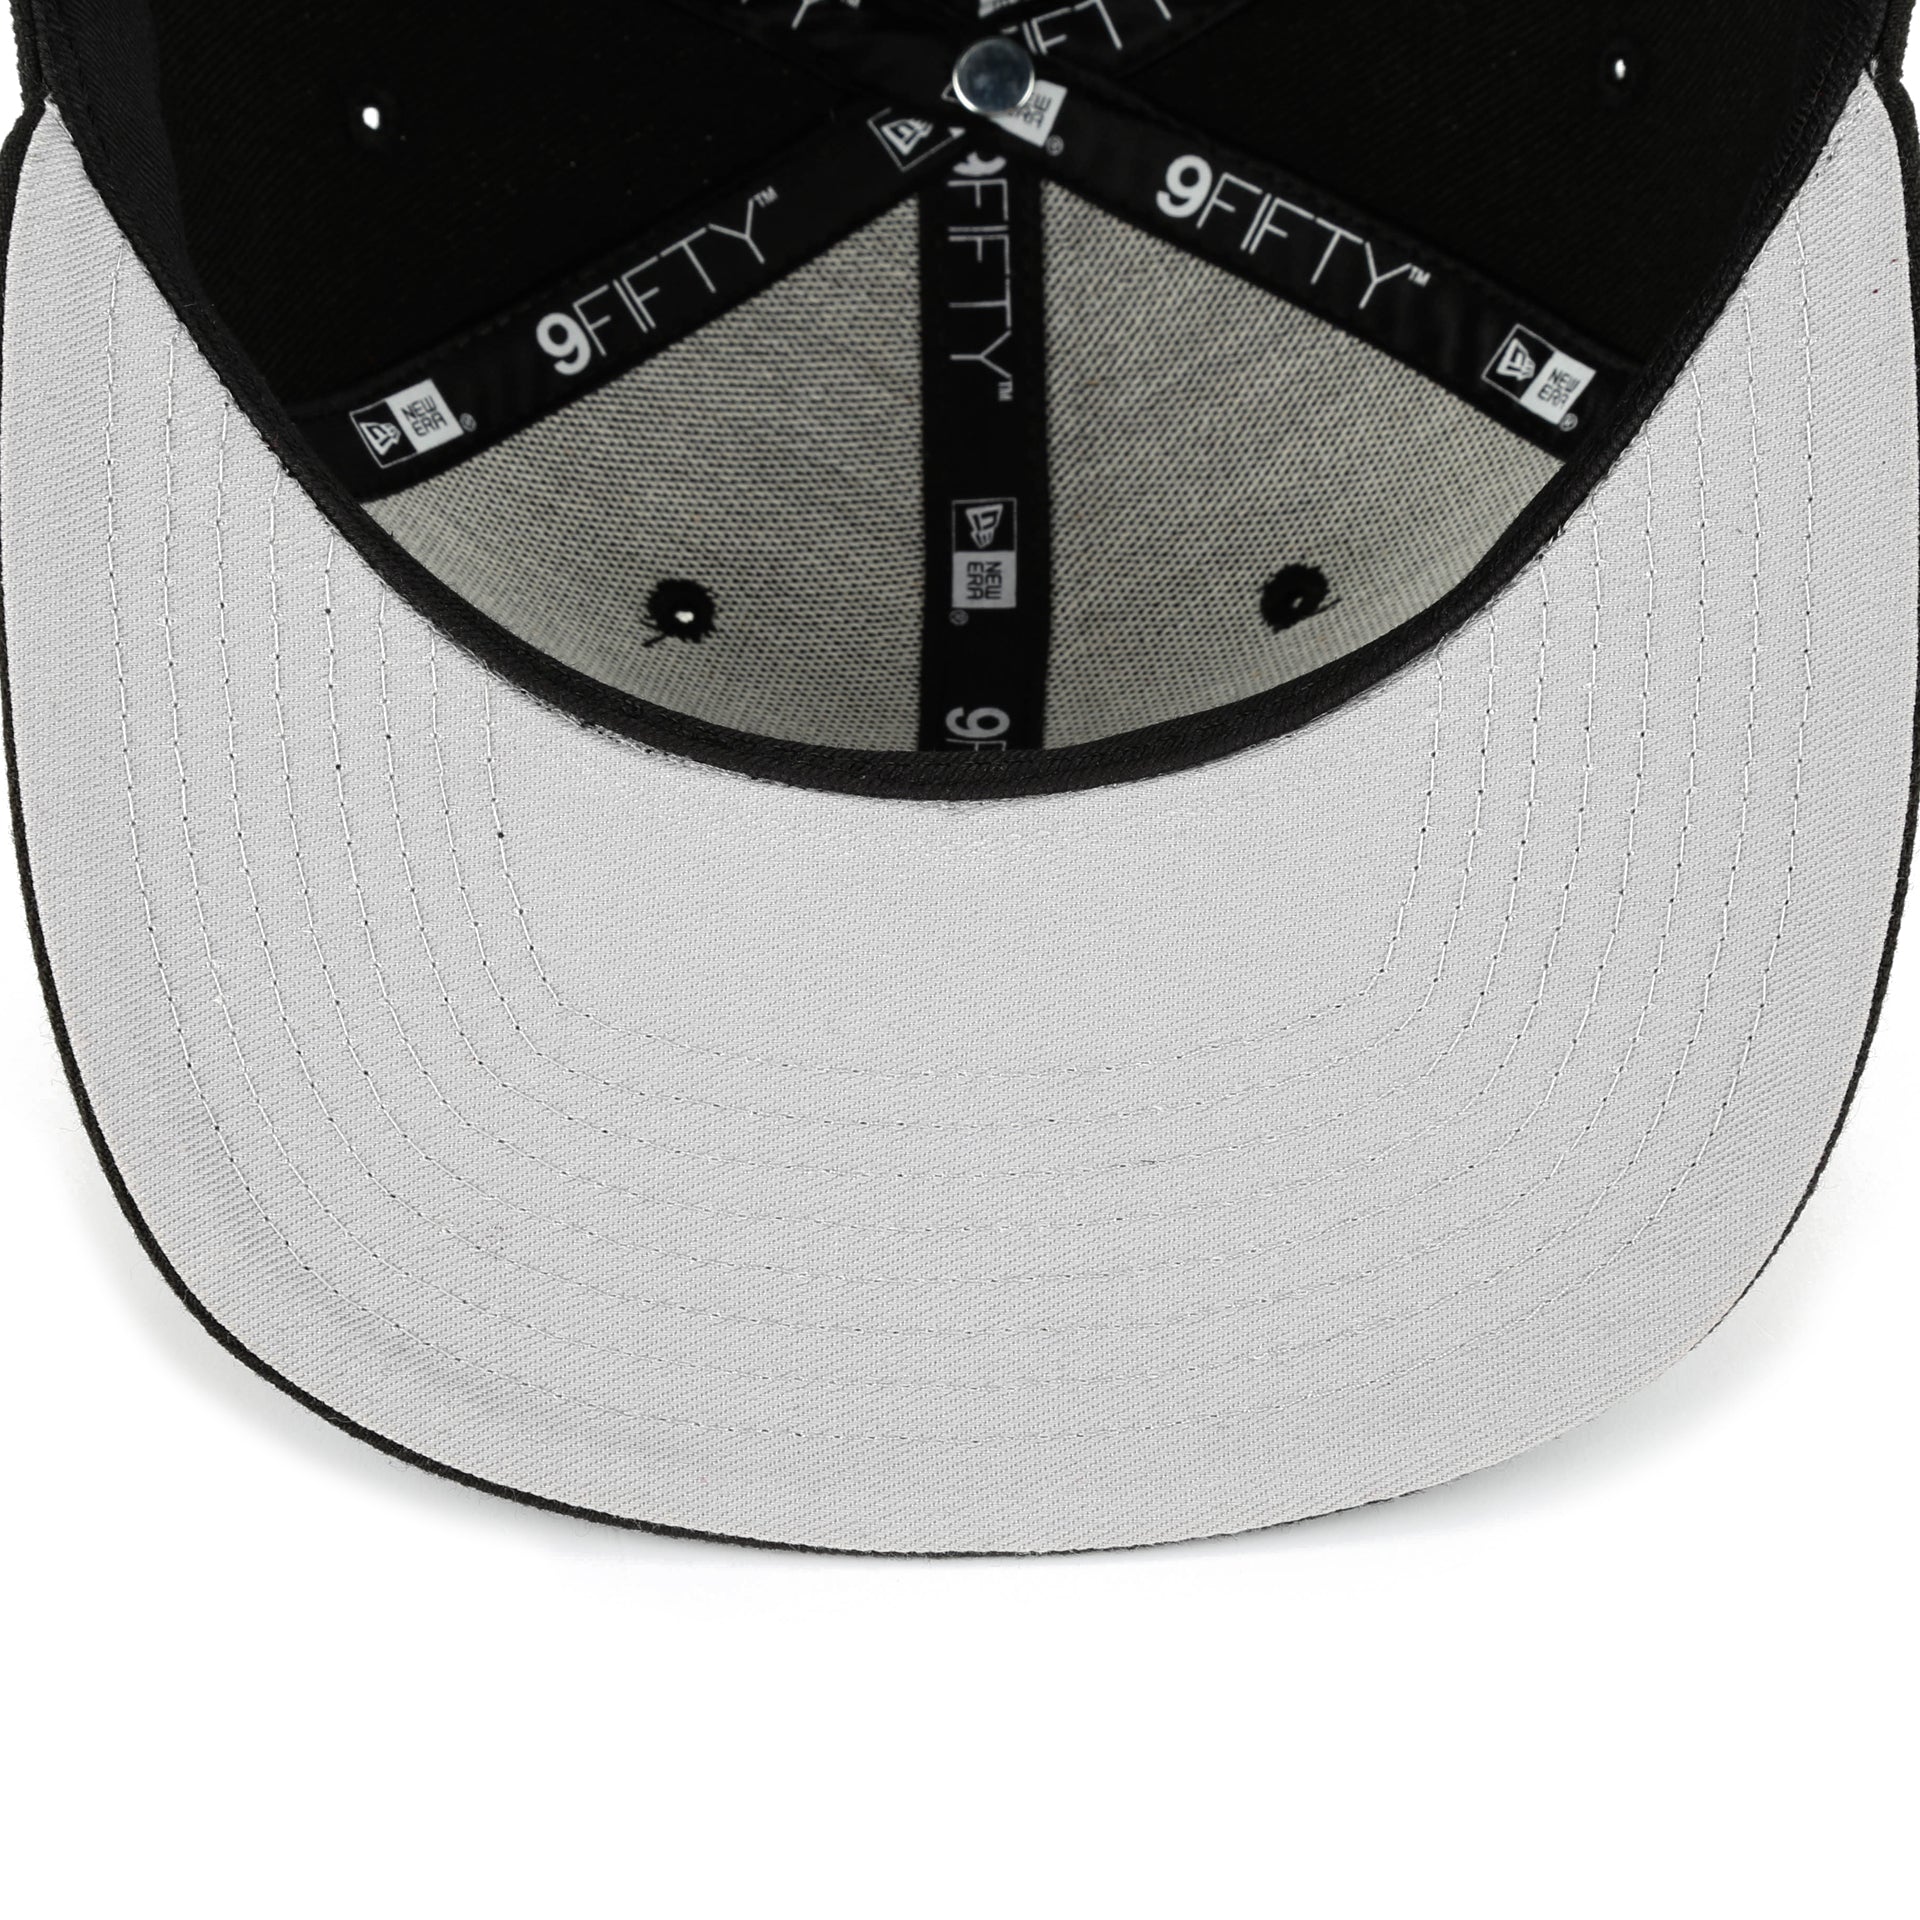 New Era Detroit Tigers MLB 9FIFTY Leather Snapback Hat